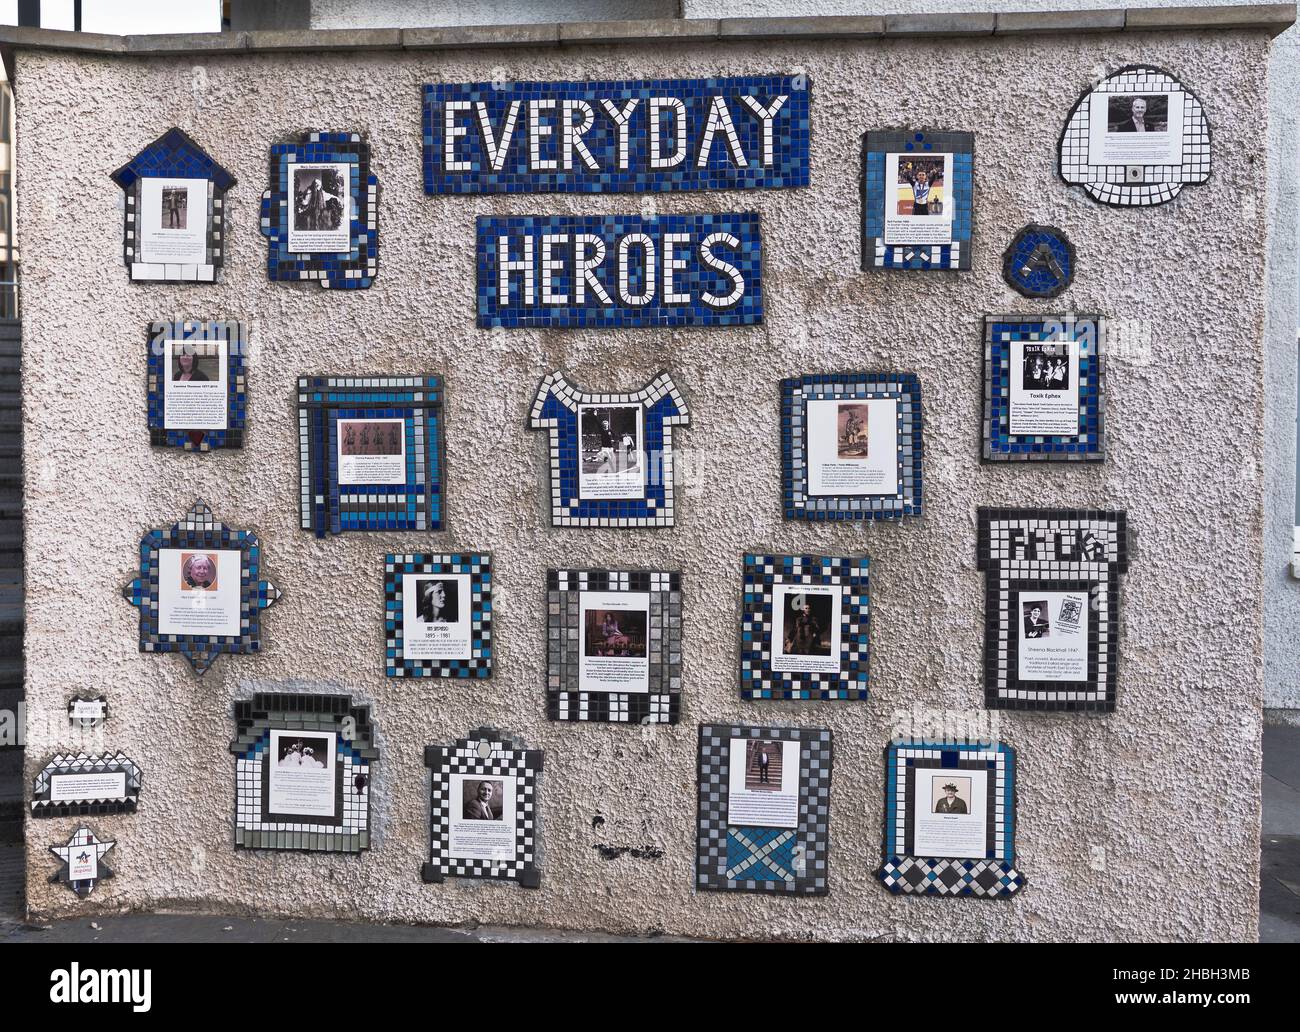 dh Everyday Heroes Wall ABERDEEN SCOTLAND célèbre Aberdonian Hero People Memorial Walls Banque D'Images